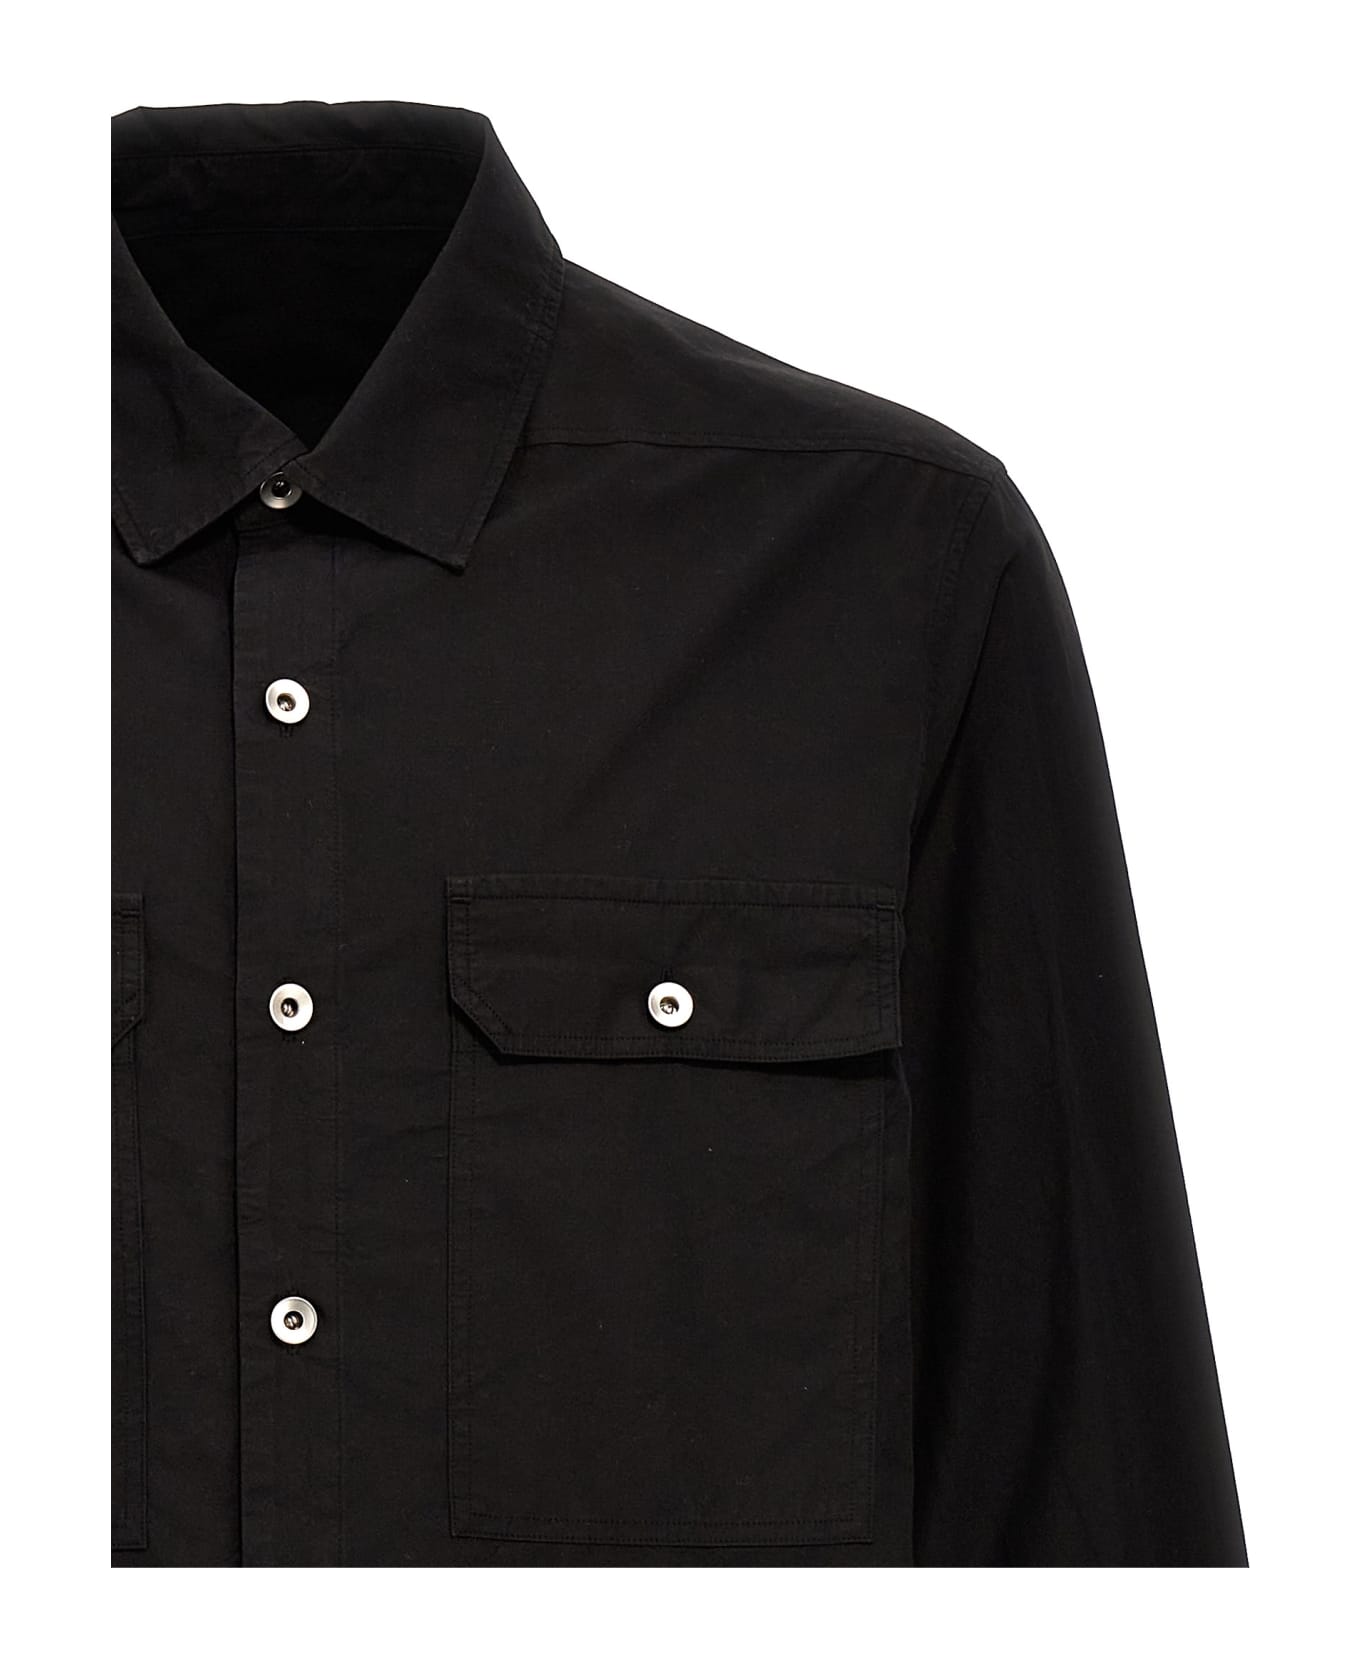 DRKSHDW Cotton Shirt - Black  